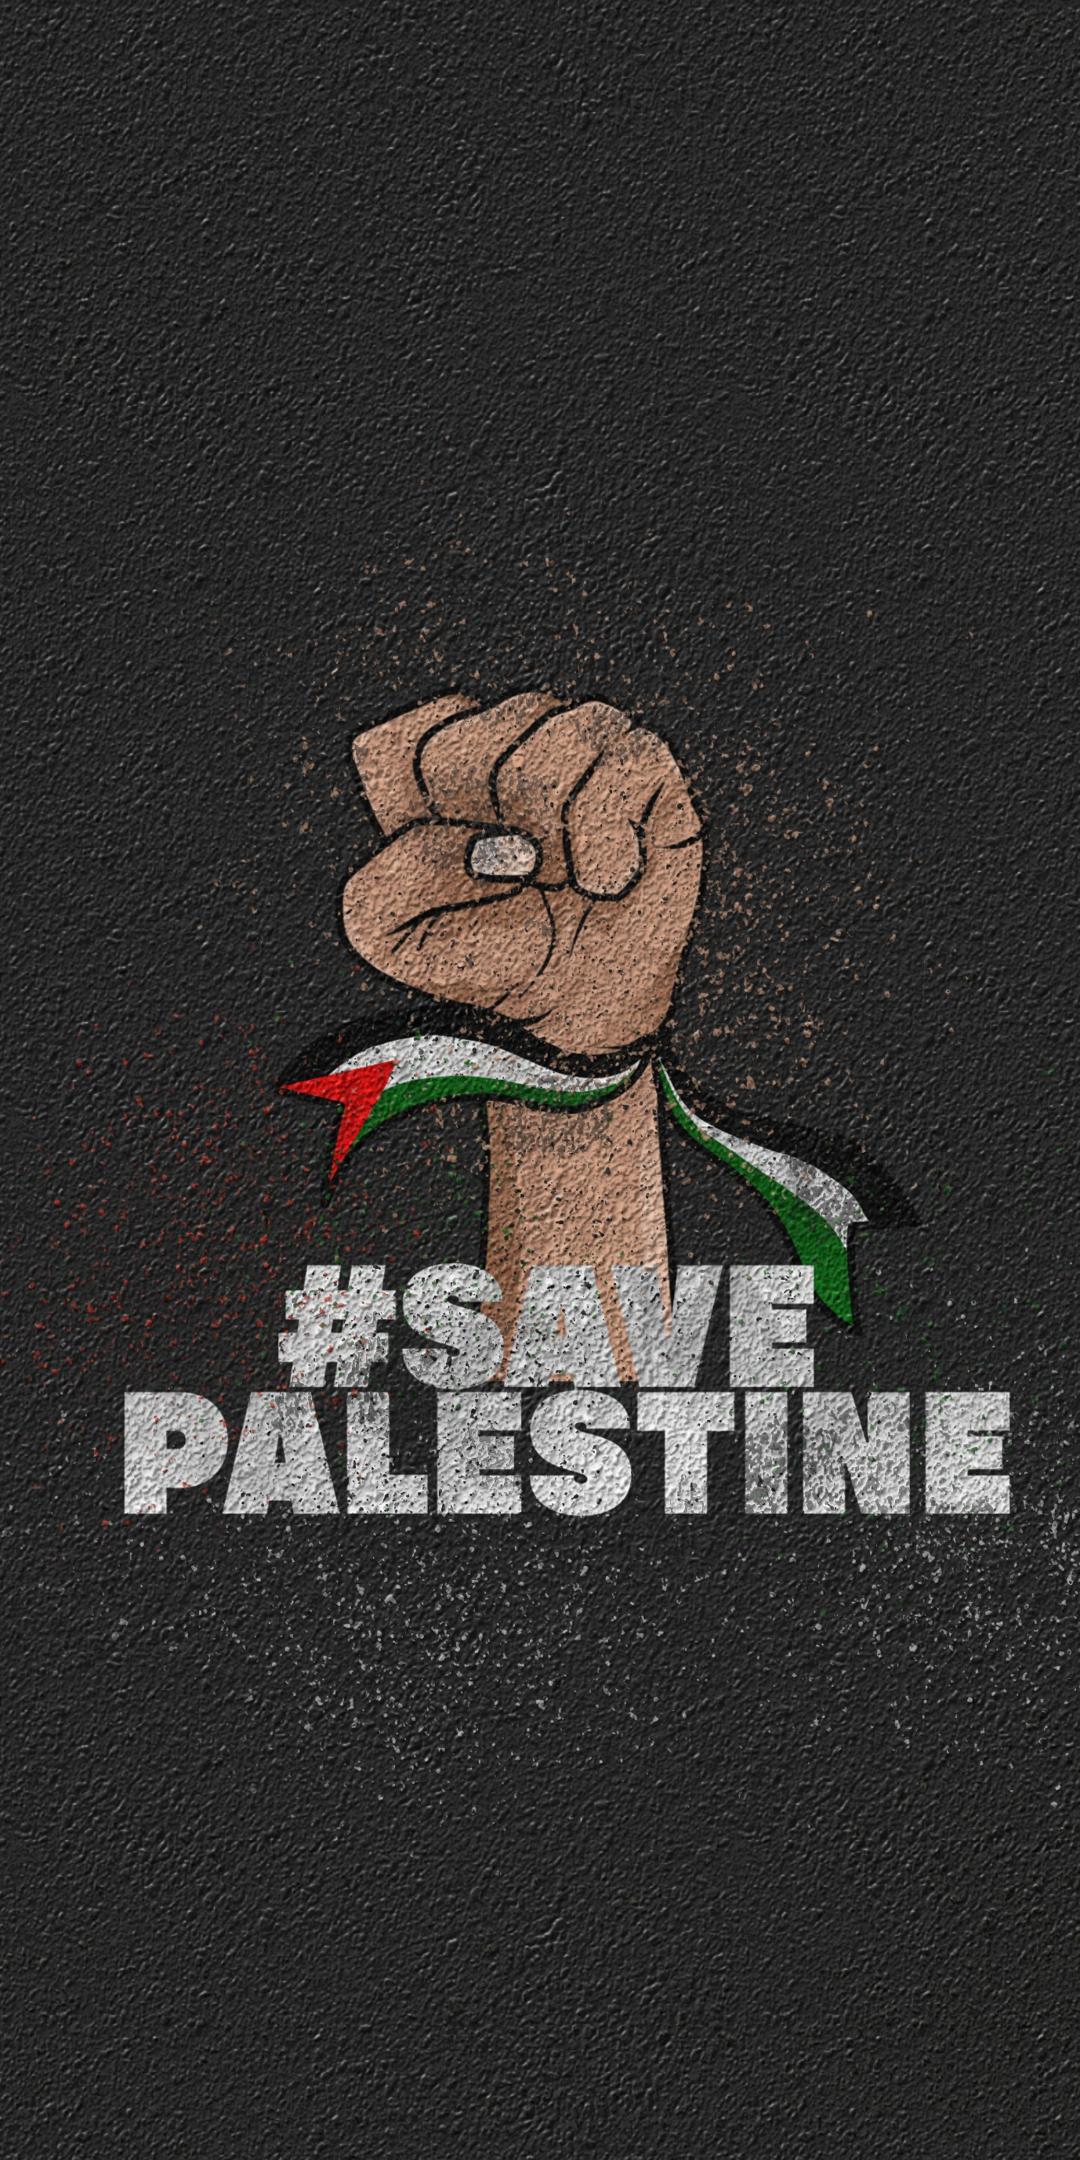 Palestine - HD Phone Wallpapers